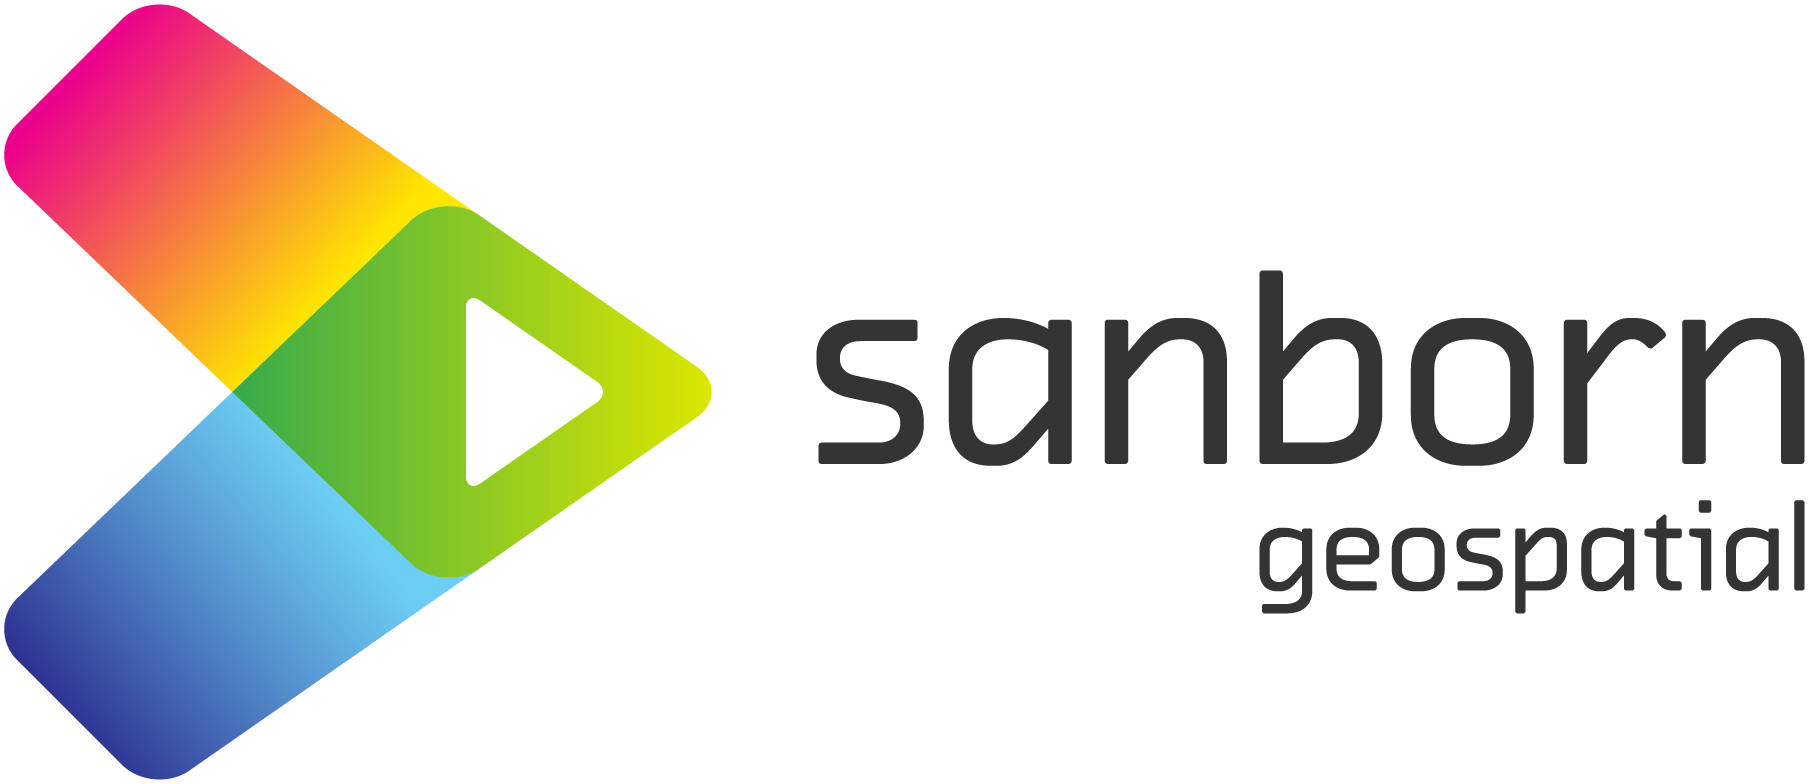 Sanborn logo and link to website